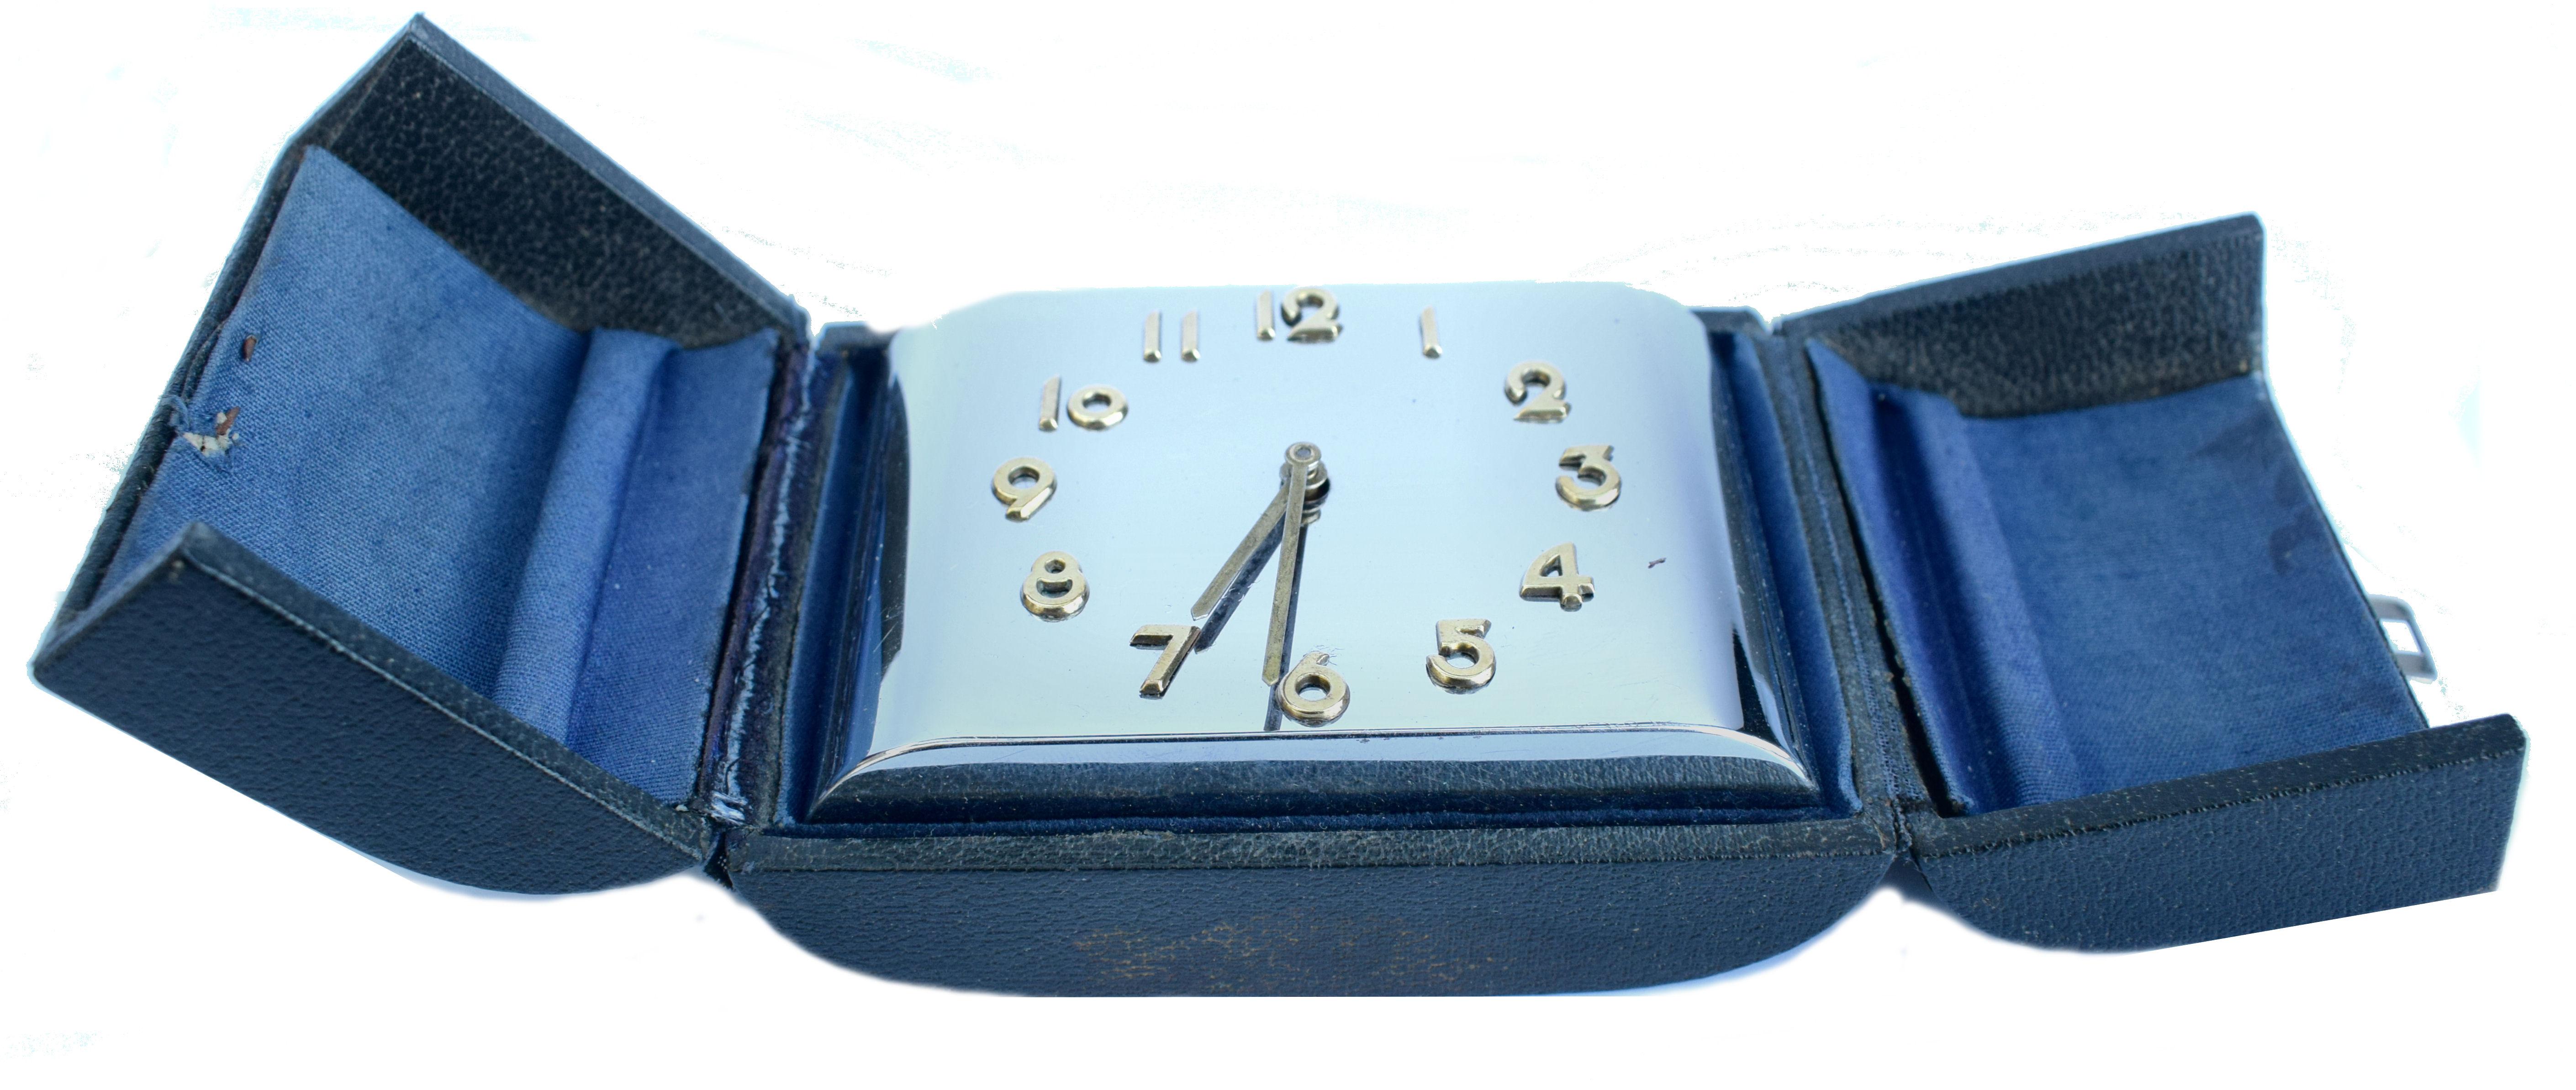 Art Deco Modernist Chrome Travel Alarm Clock, c1930 In Good Condition For Sale In Devon, England